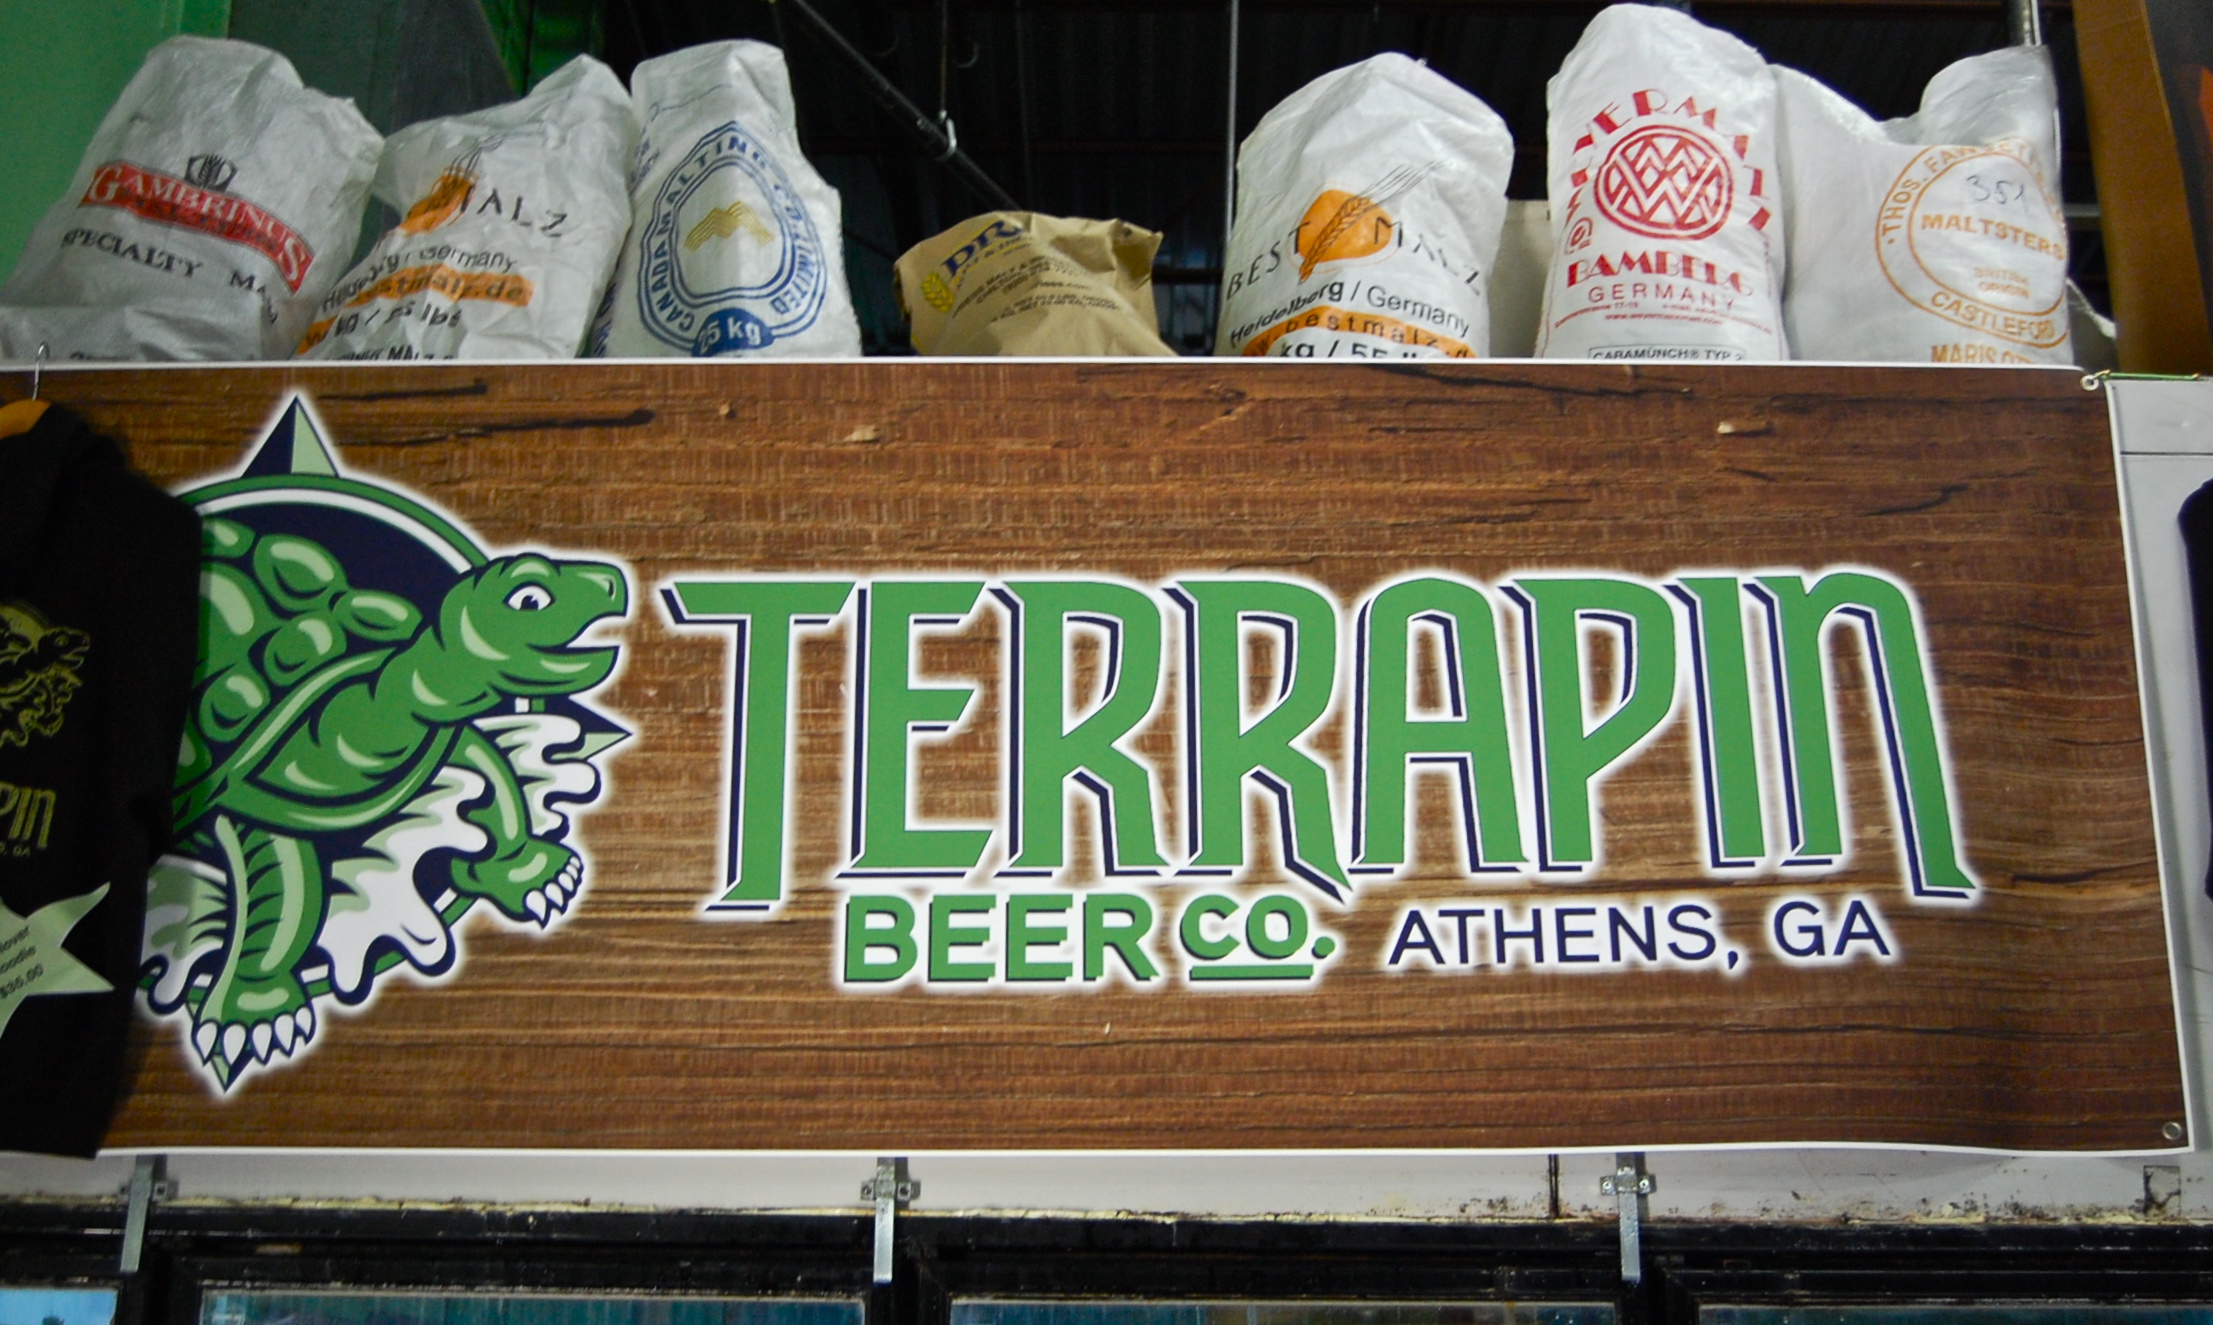 Terrapin Brewery